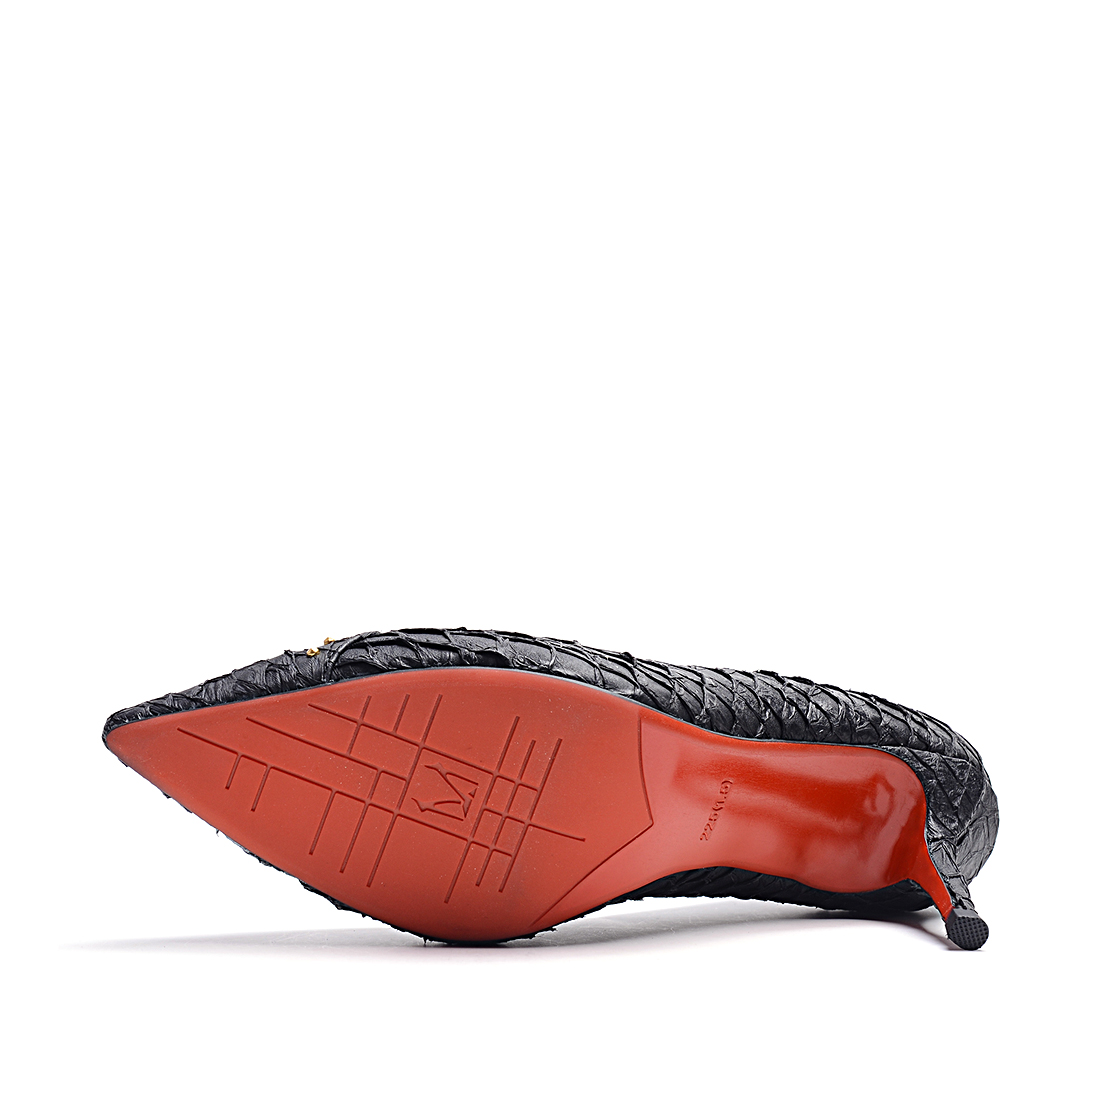 [Run&Heels]性感风金属装饰进口开边珠牛皮单鞋(尺码标准)
编号：A3848D1A74